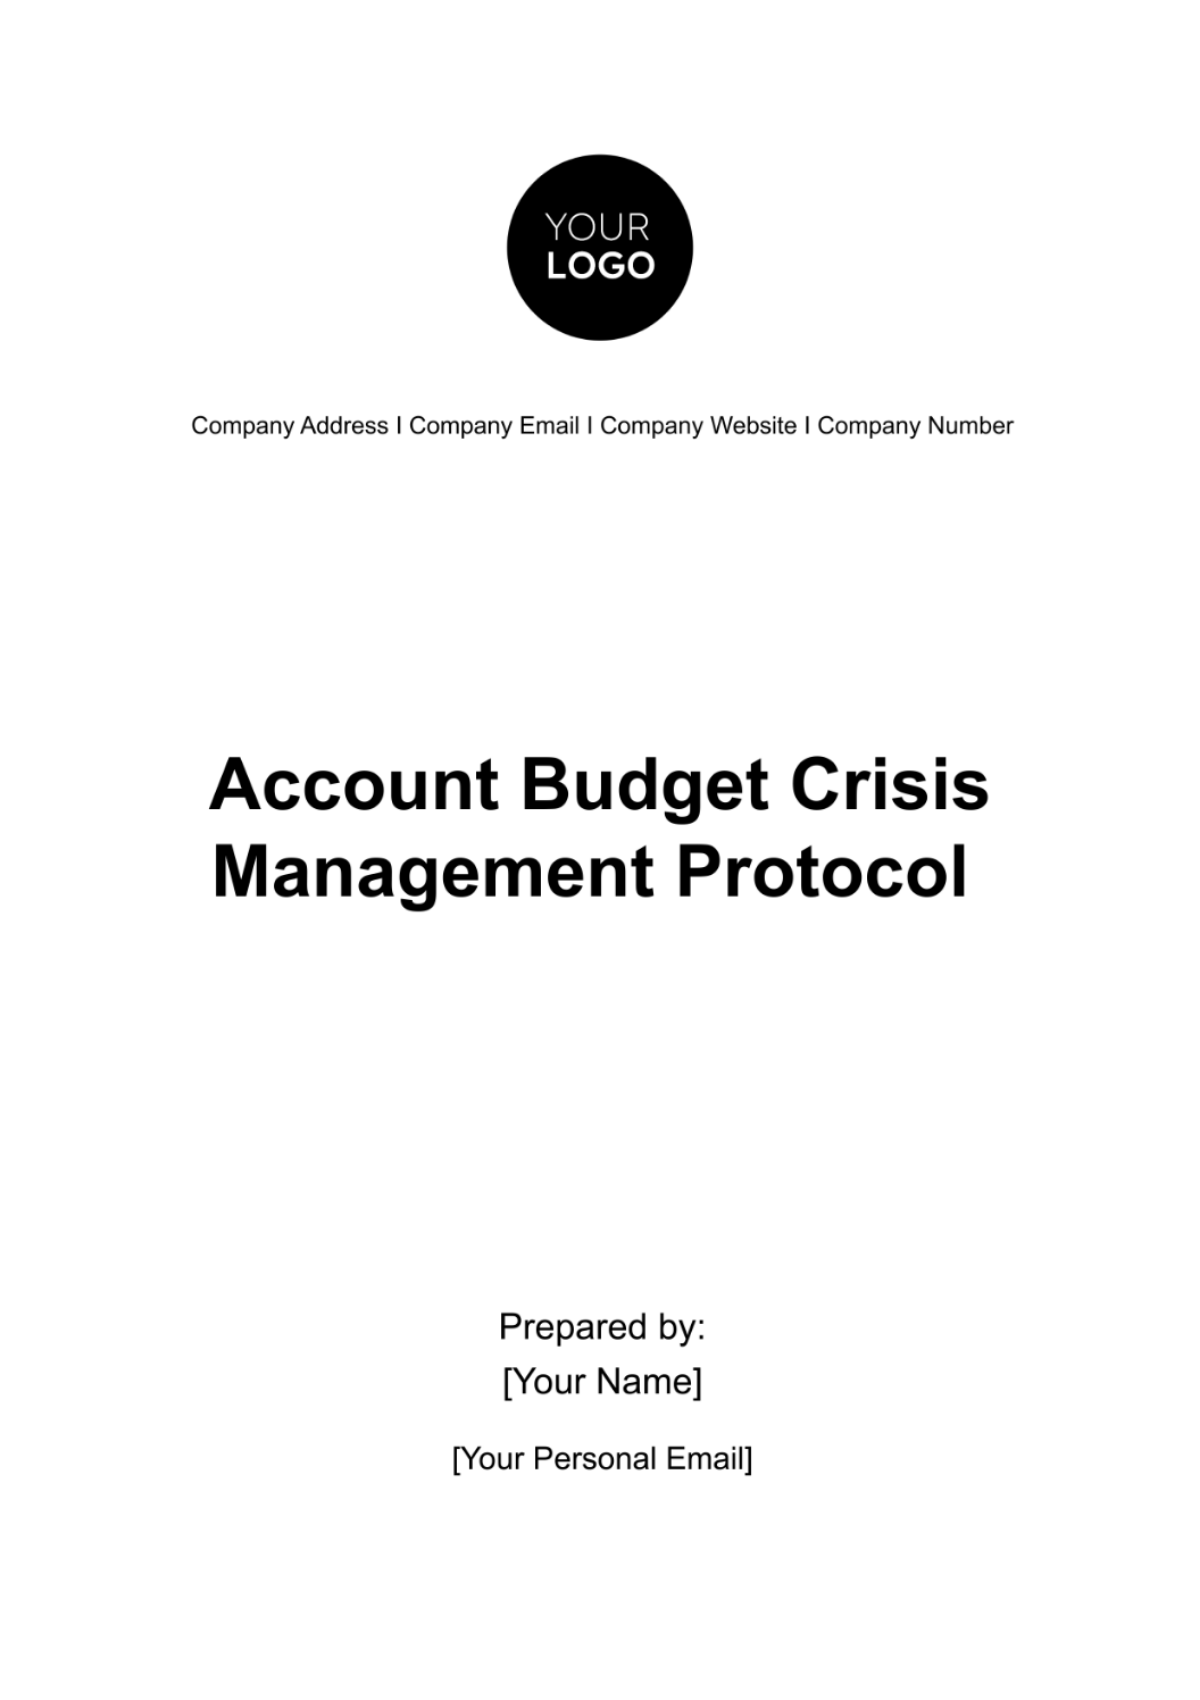 Account Budget Crisis Management Protocol Template